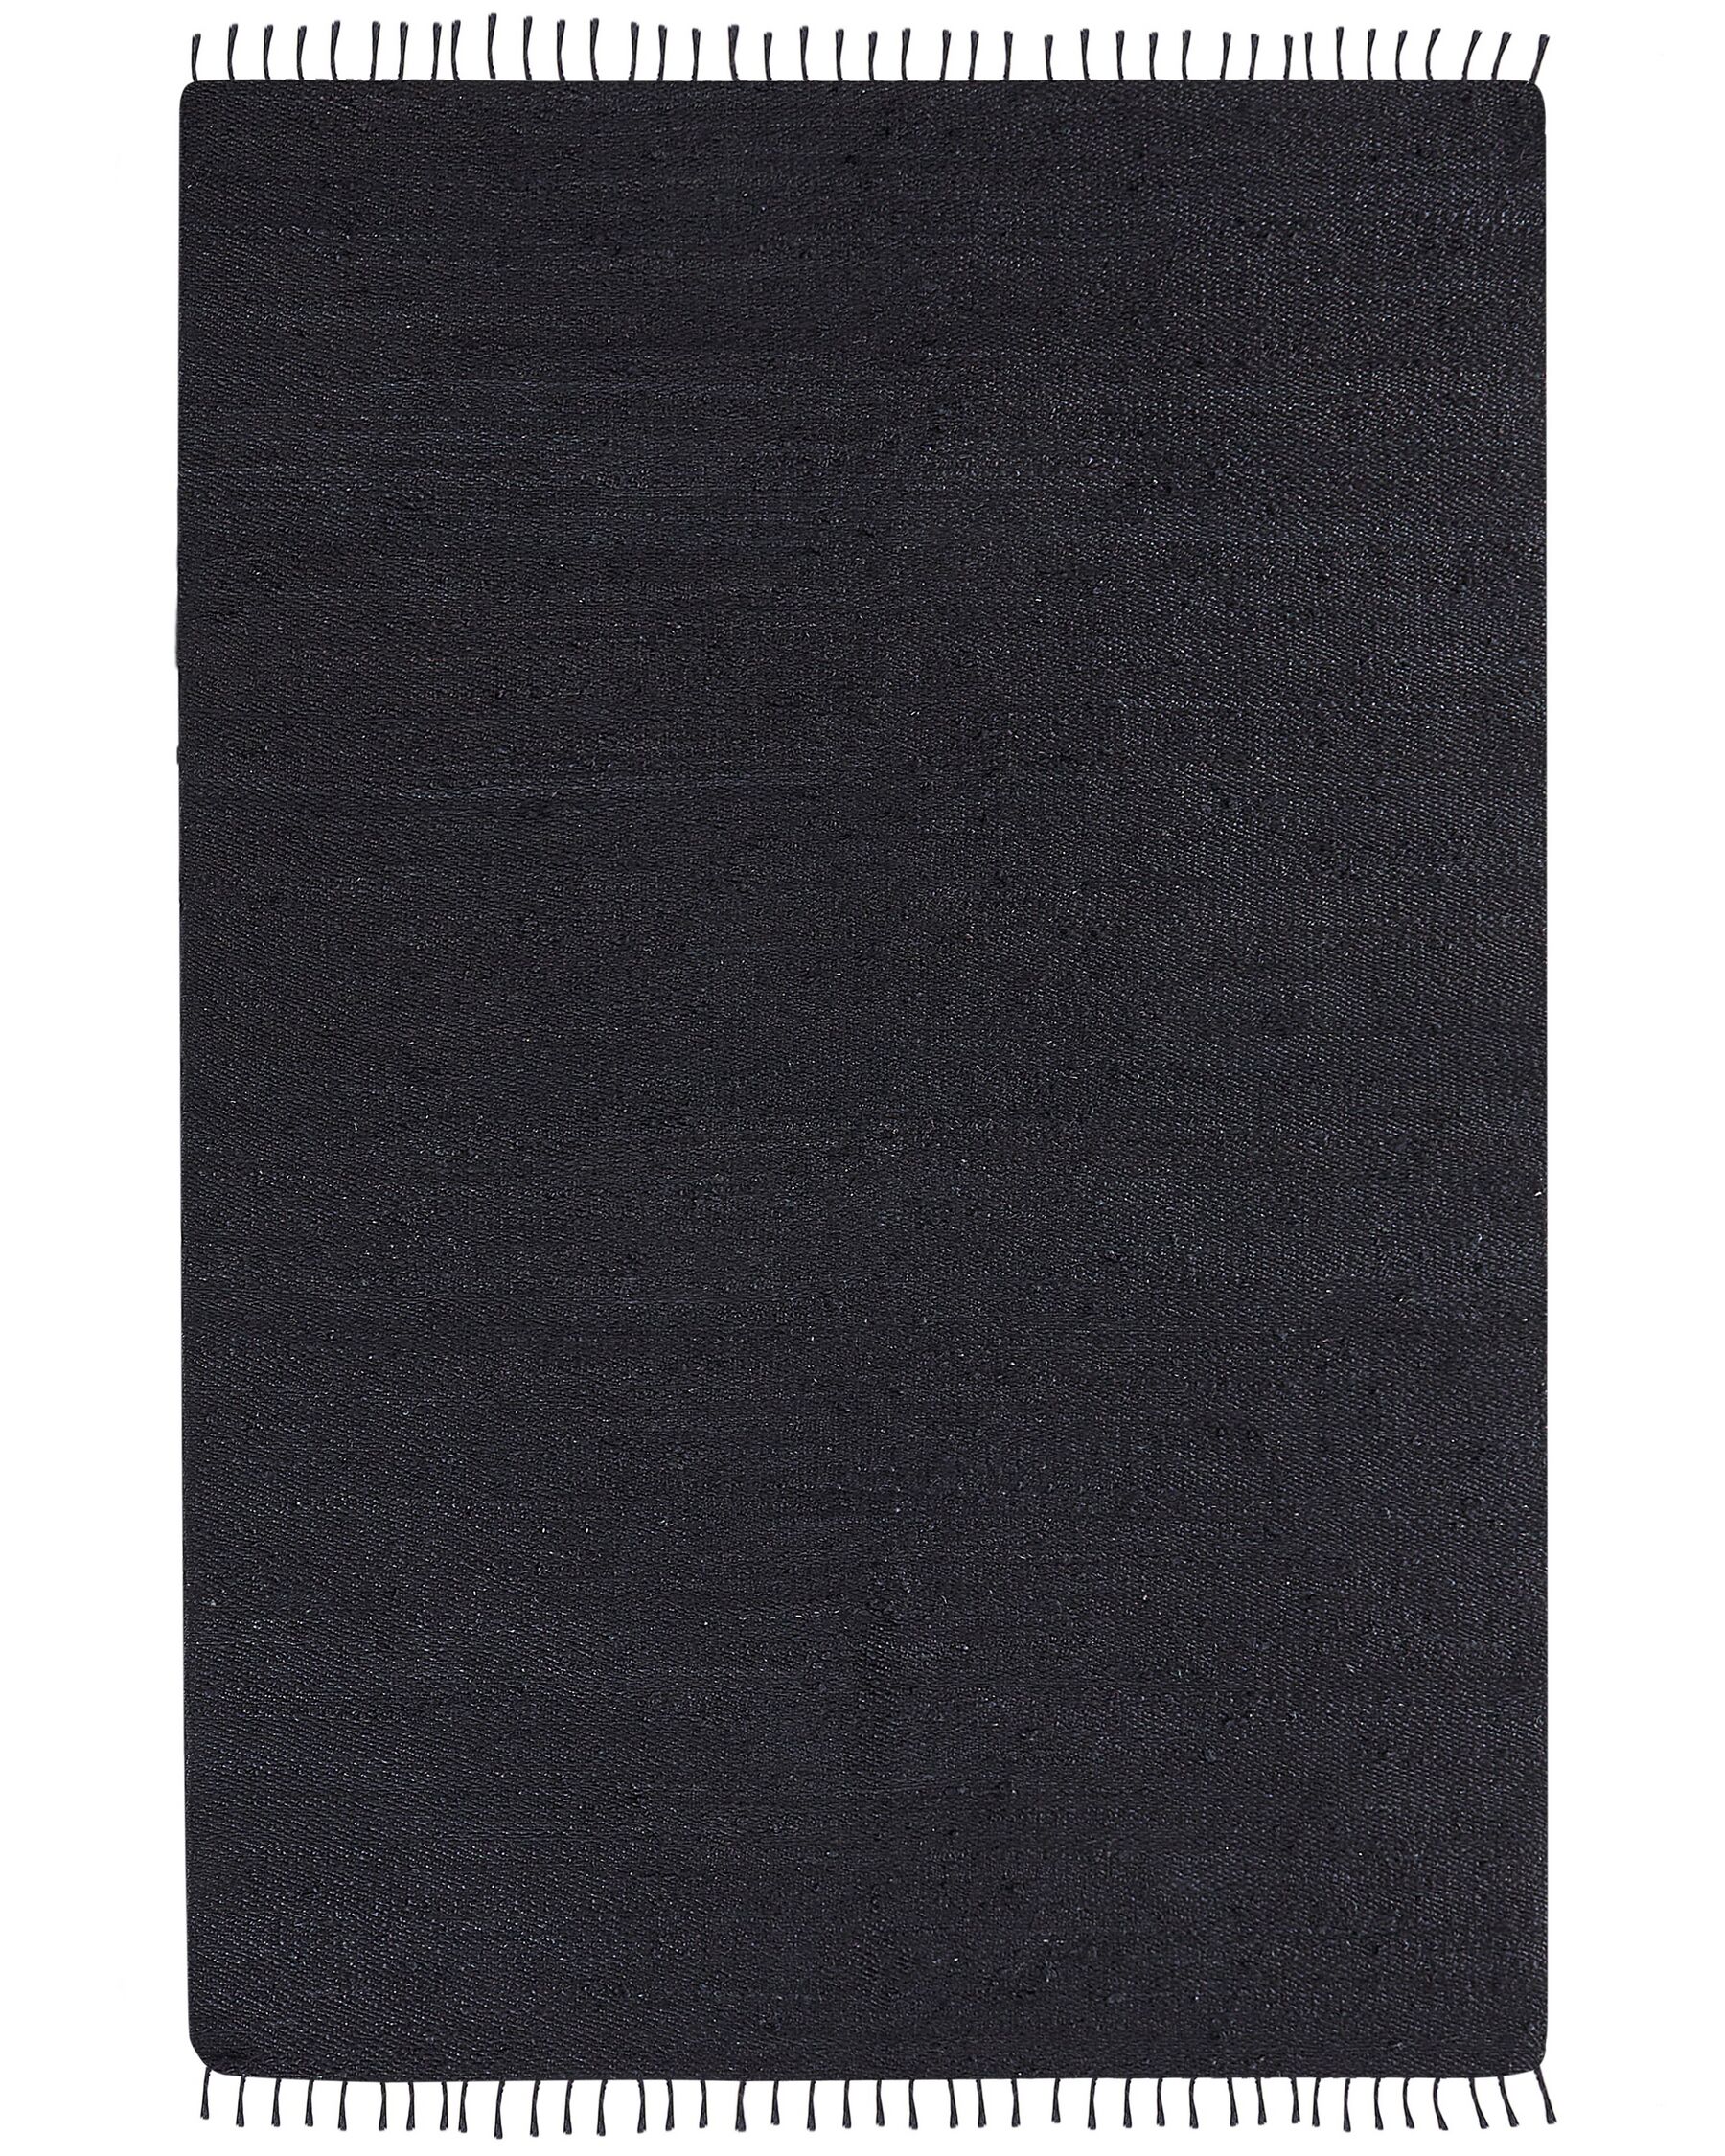 Vloerkleed jute zwart 160 x 230 cm SINANKOY_903994